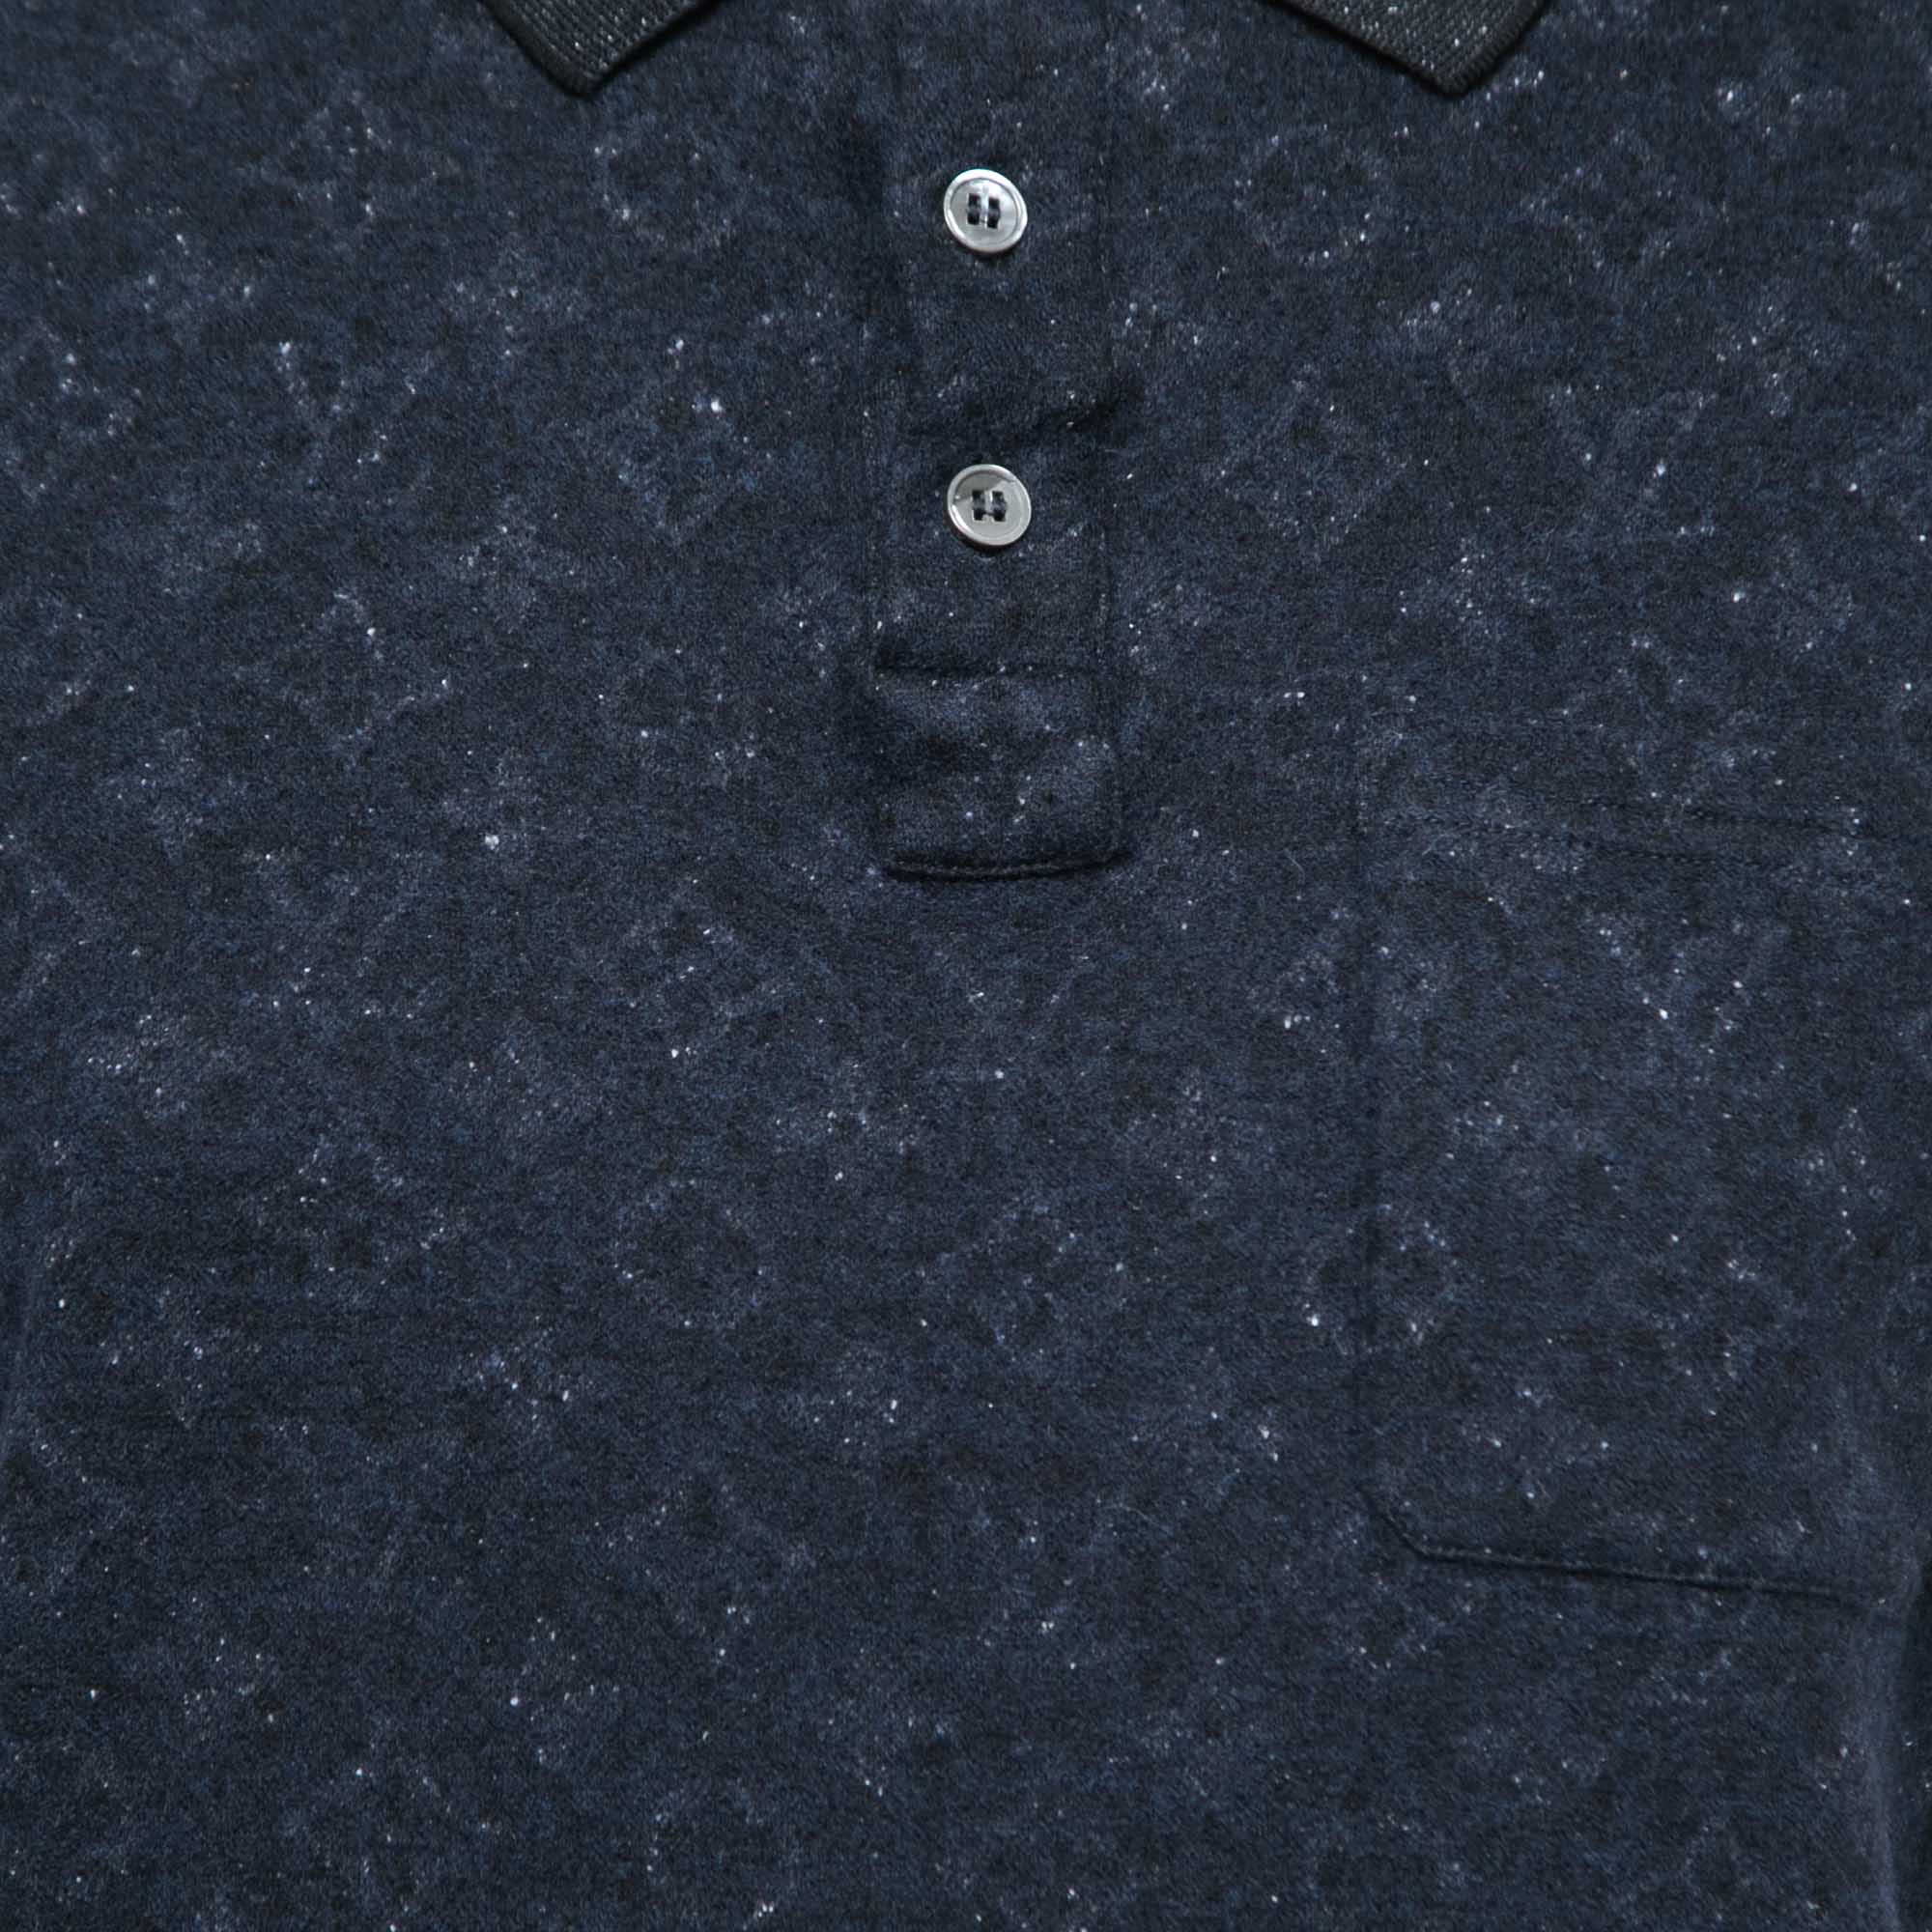 Louis Vuitton Navy Blue Cotton Knit Polo T-Shirt M Louis Vuitton